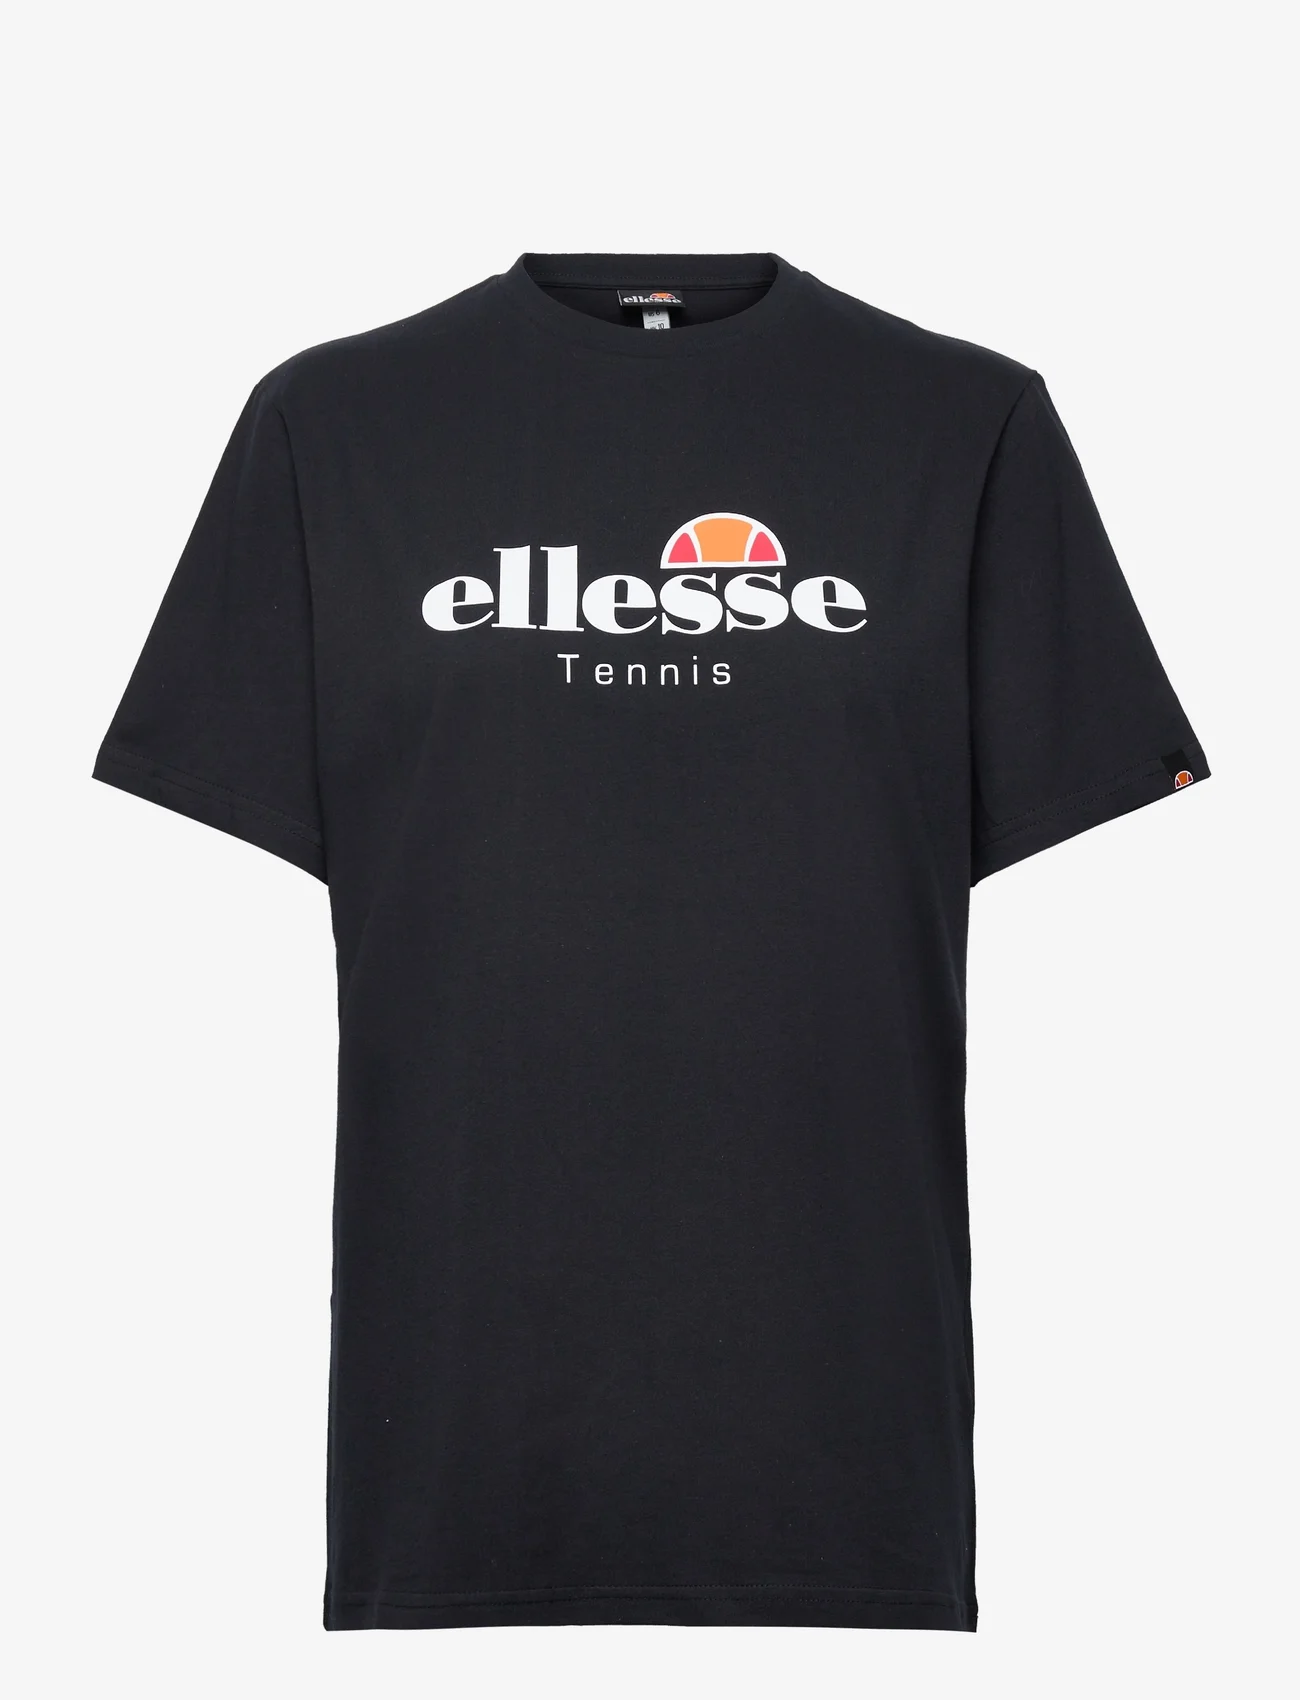 Ellesse - EL COLPO TEE - najniższe ceny - black - 0